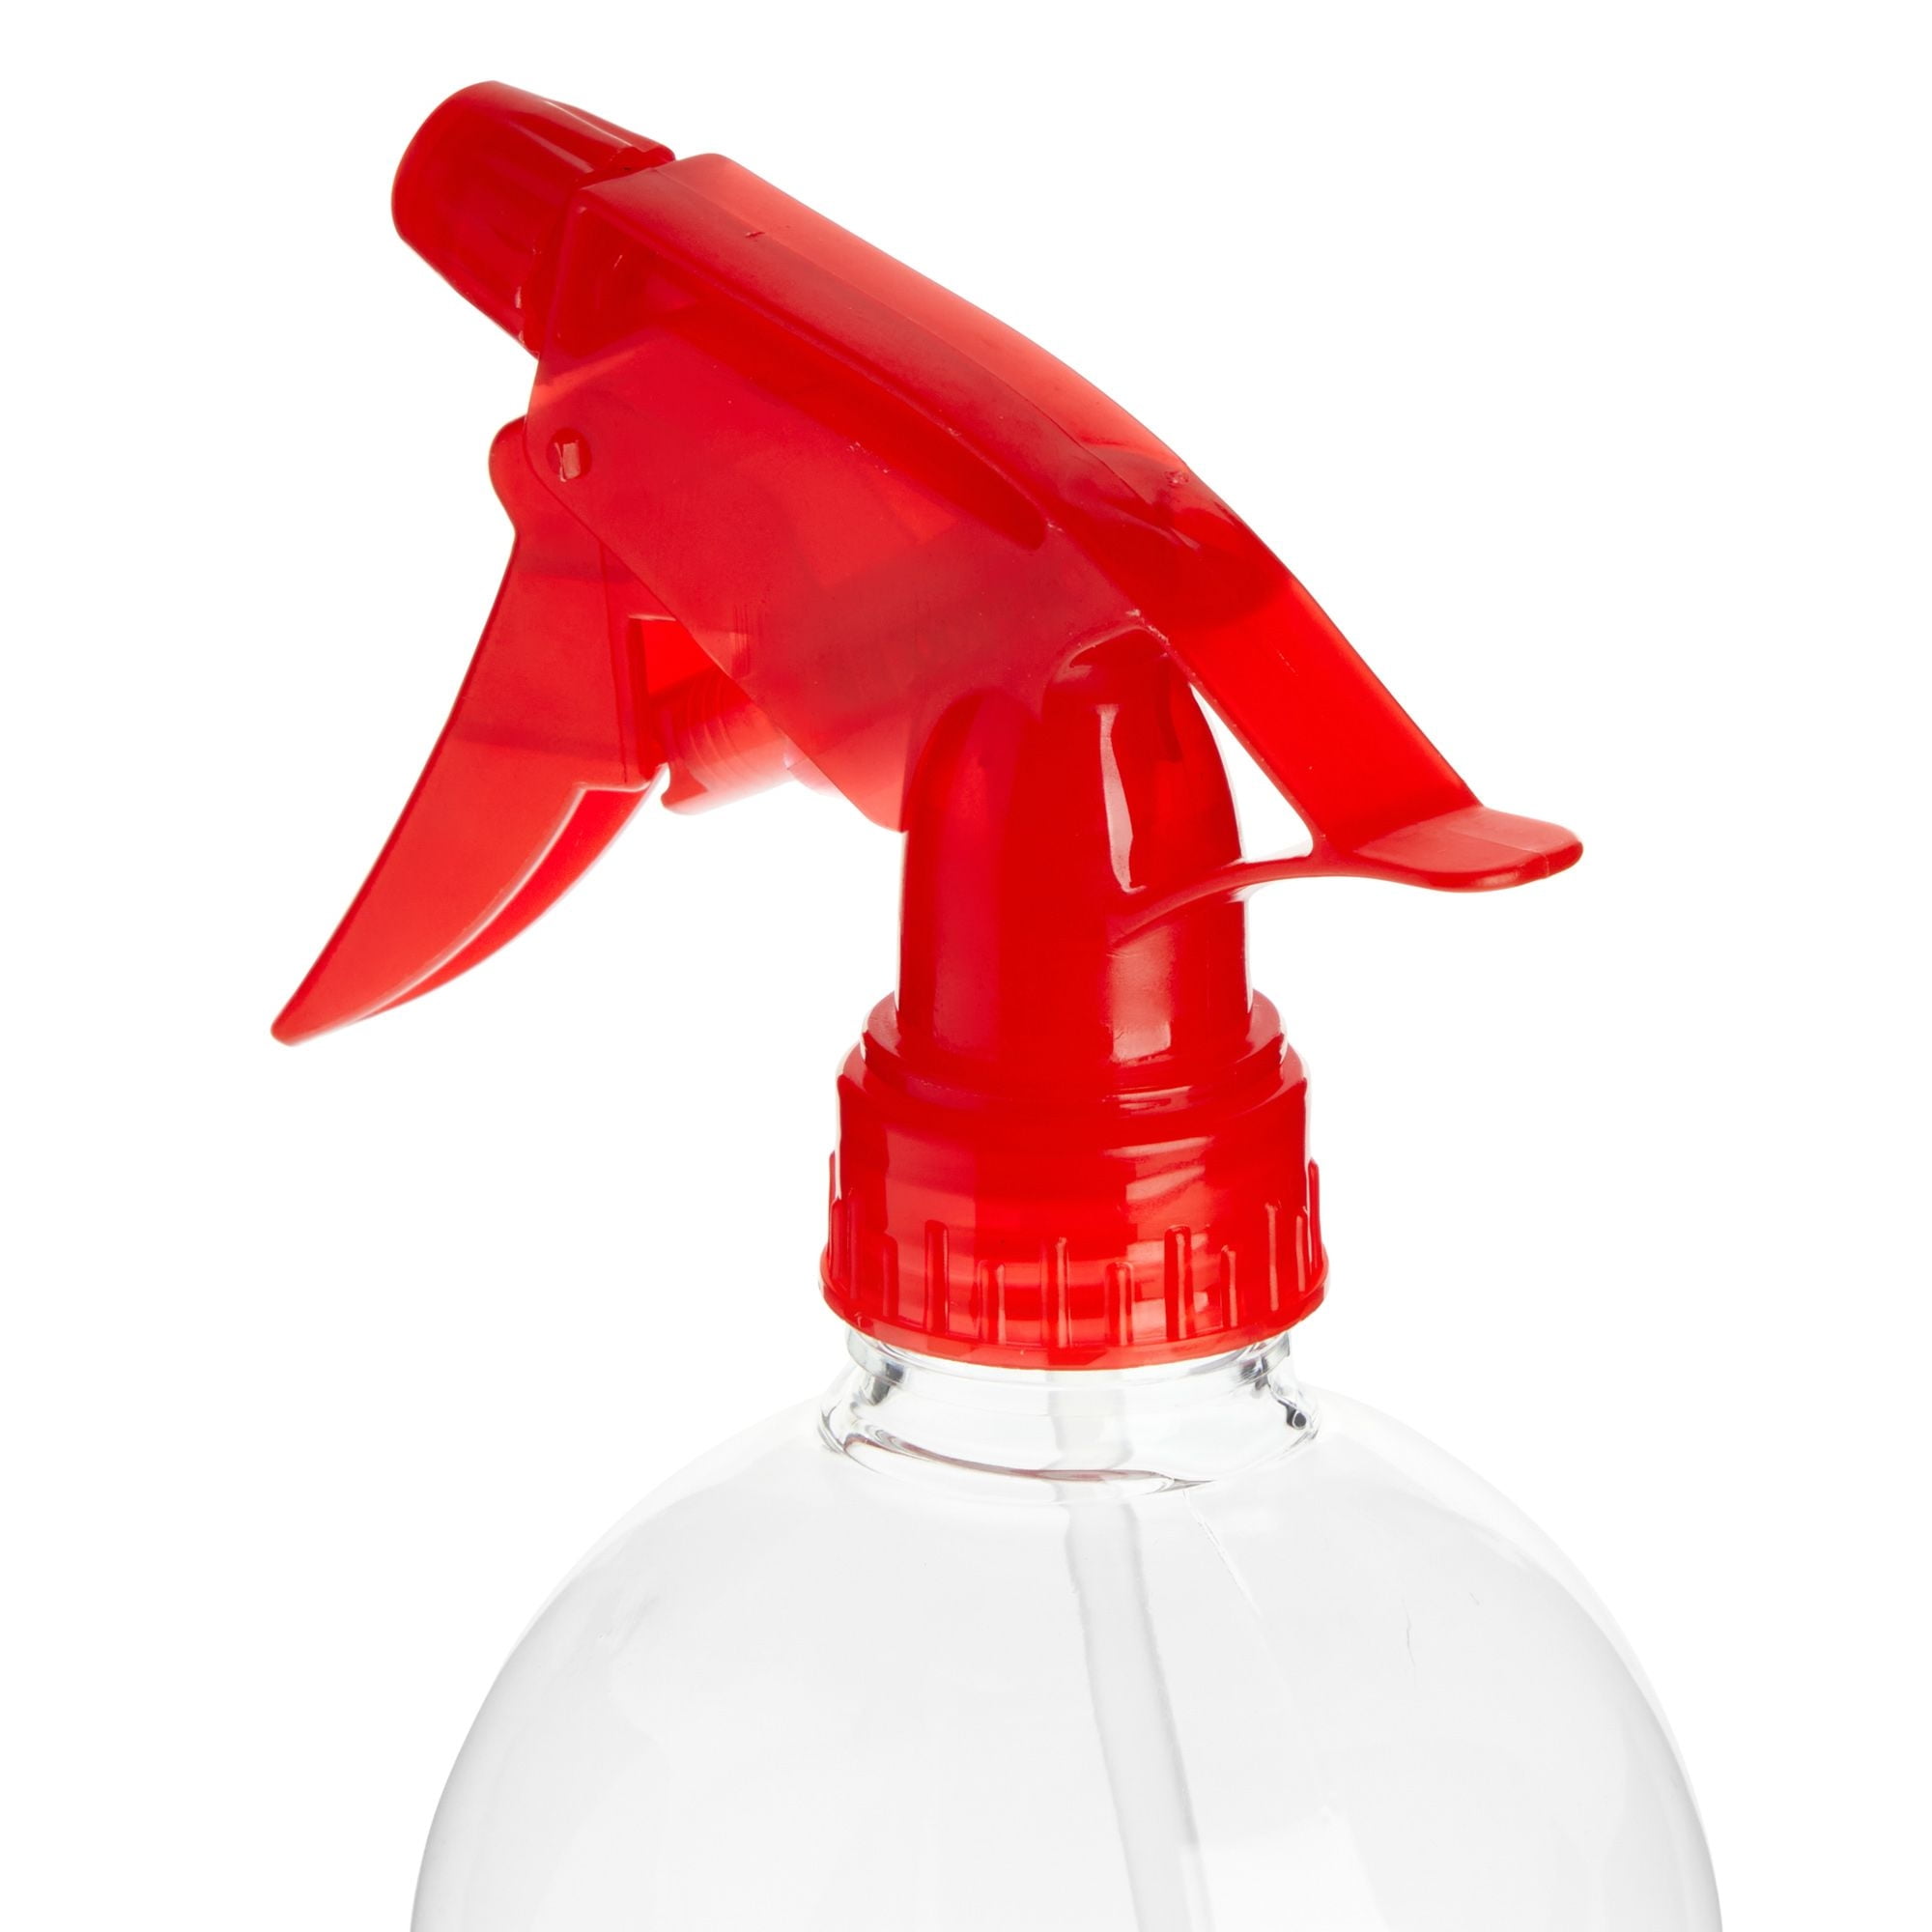 QuickMist™ Spray Bottle - Dynalon